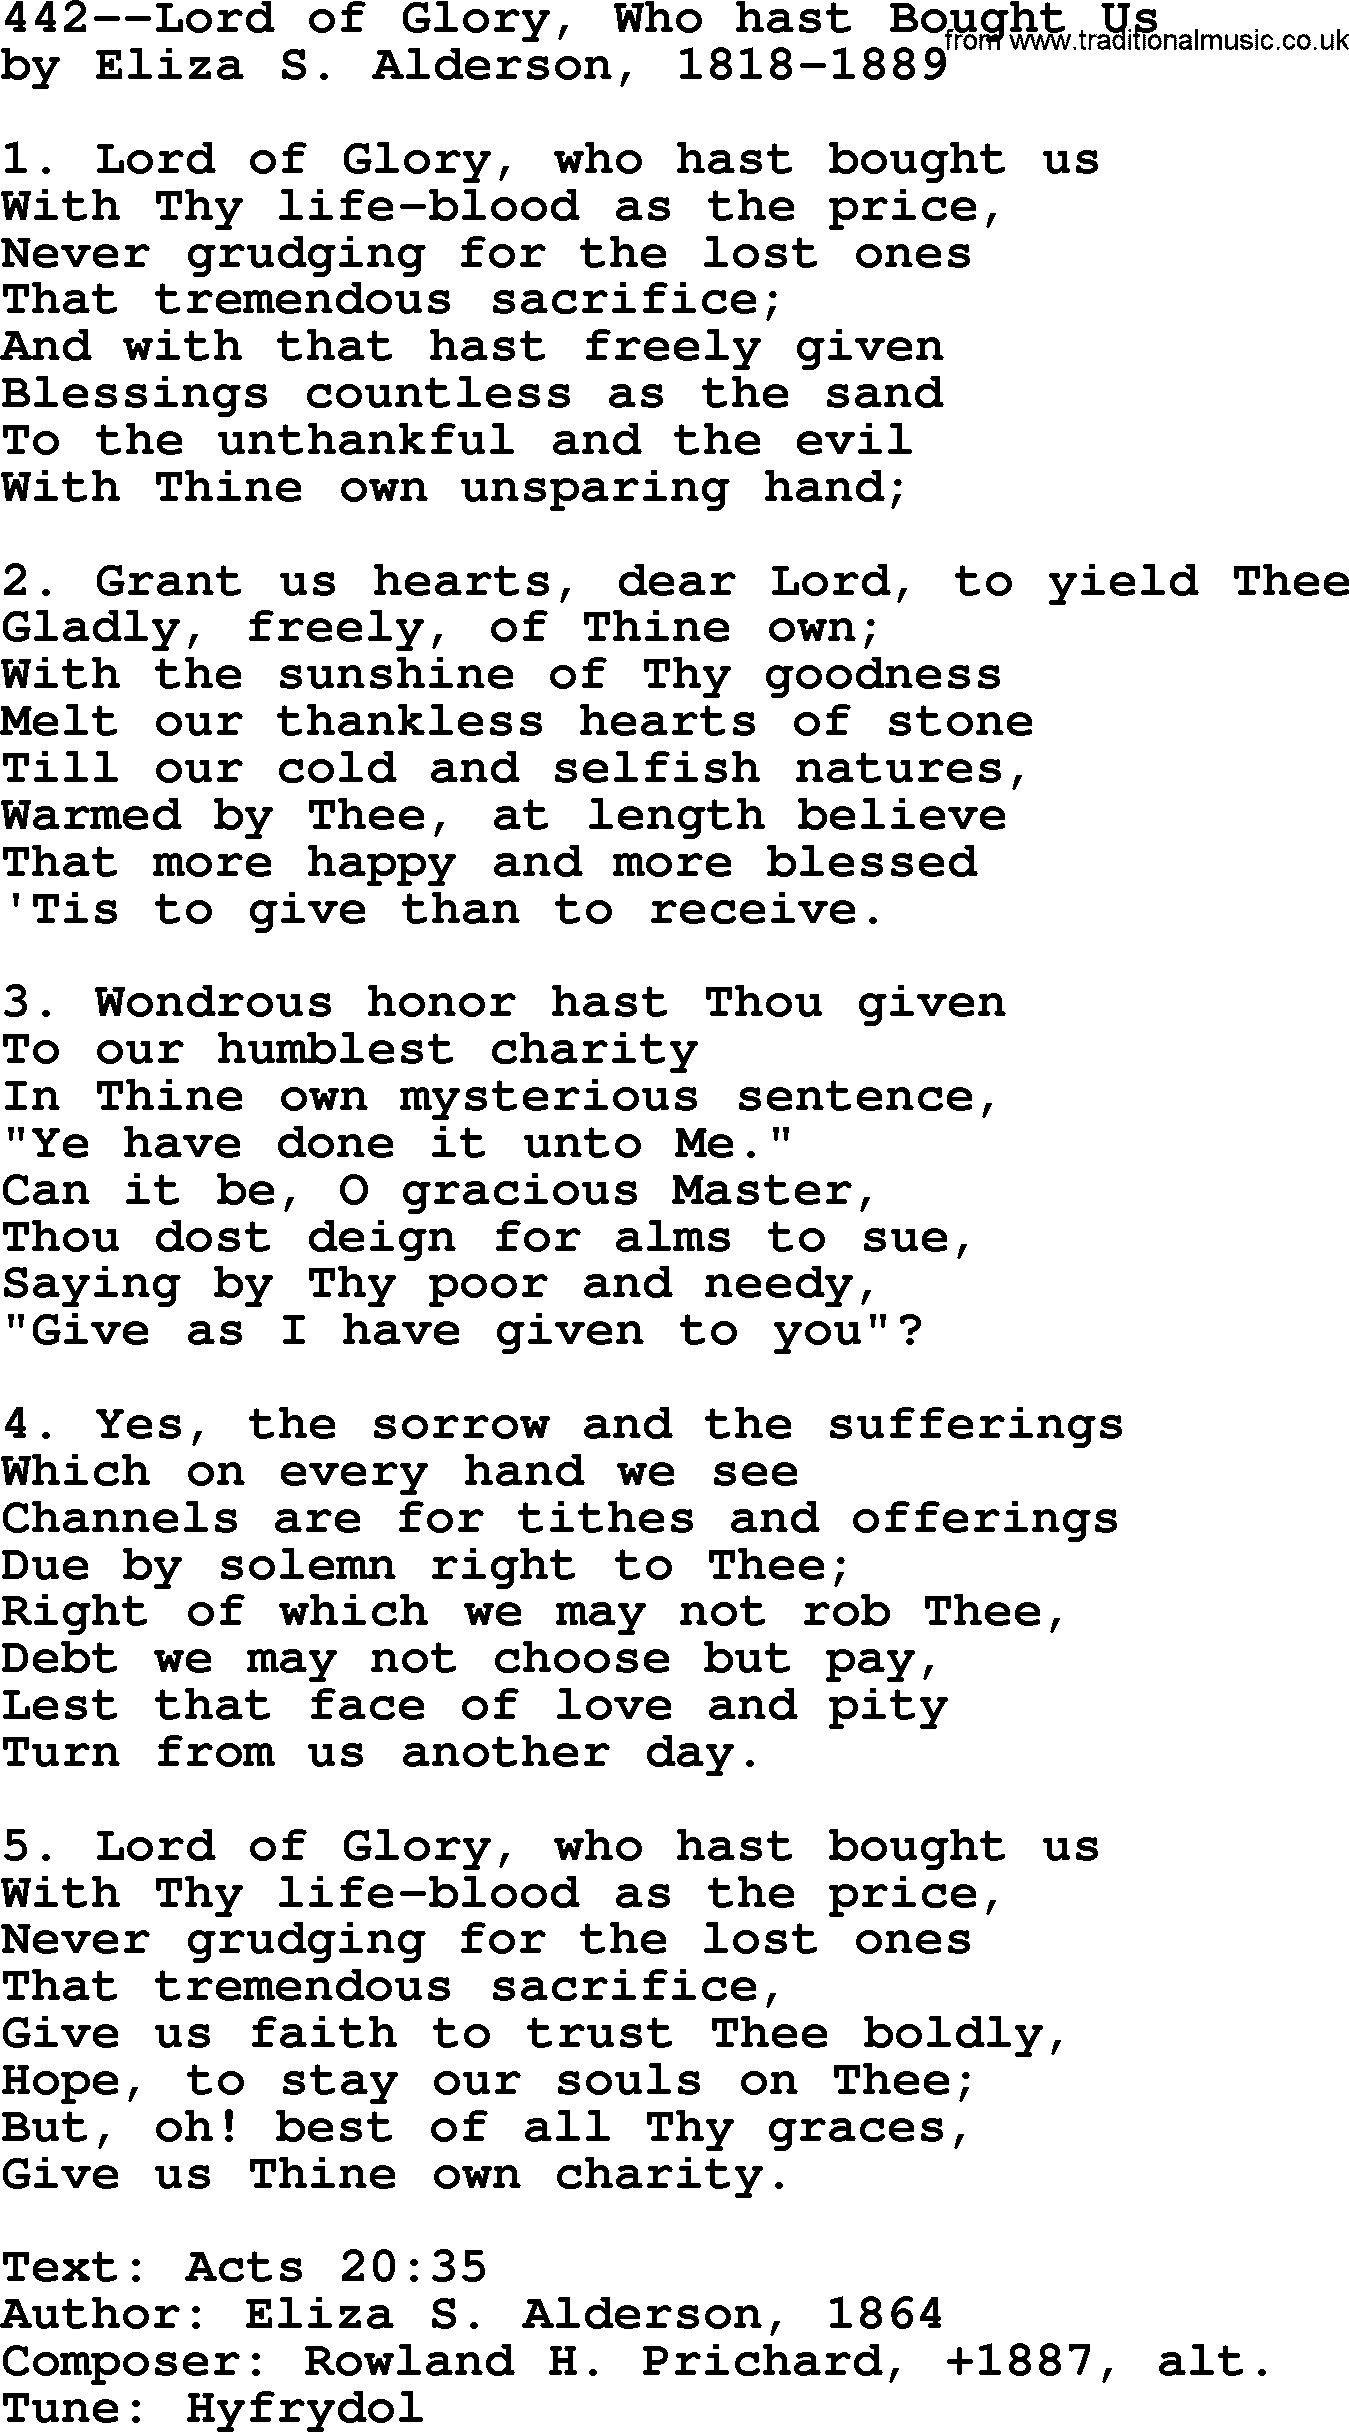 Lutheran Hymn: 442--Lord of Glory, Who hast Bought Us.txt lyrics with PDF